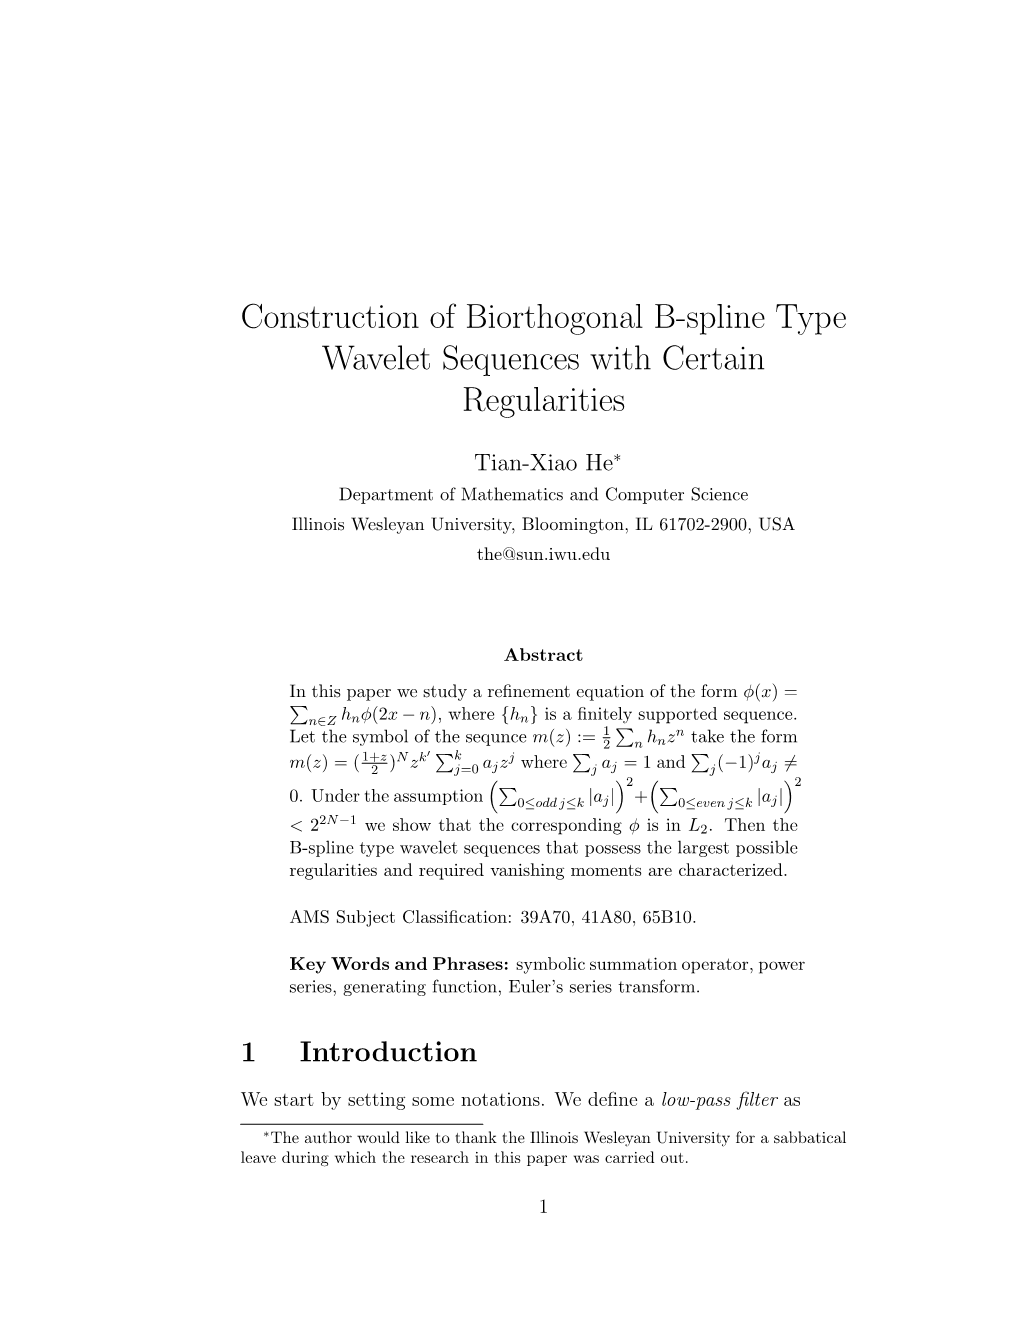 Construction of Biorthogonal B-Spline Type Wavelet Sequences with Certain Regularities